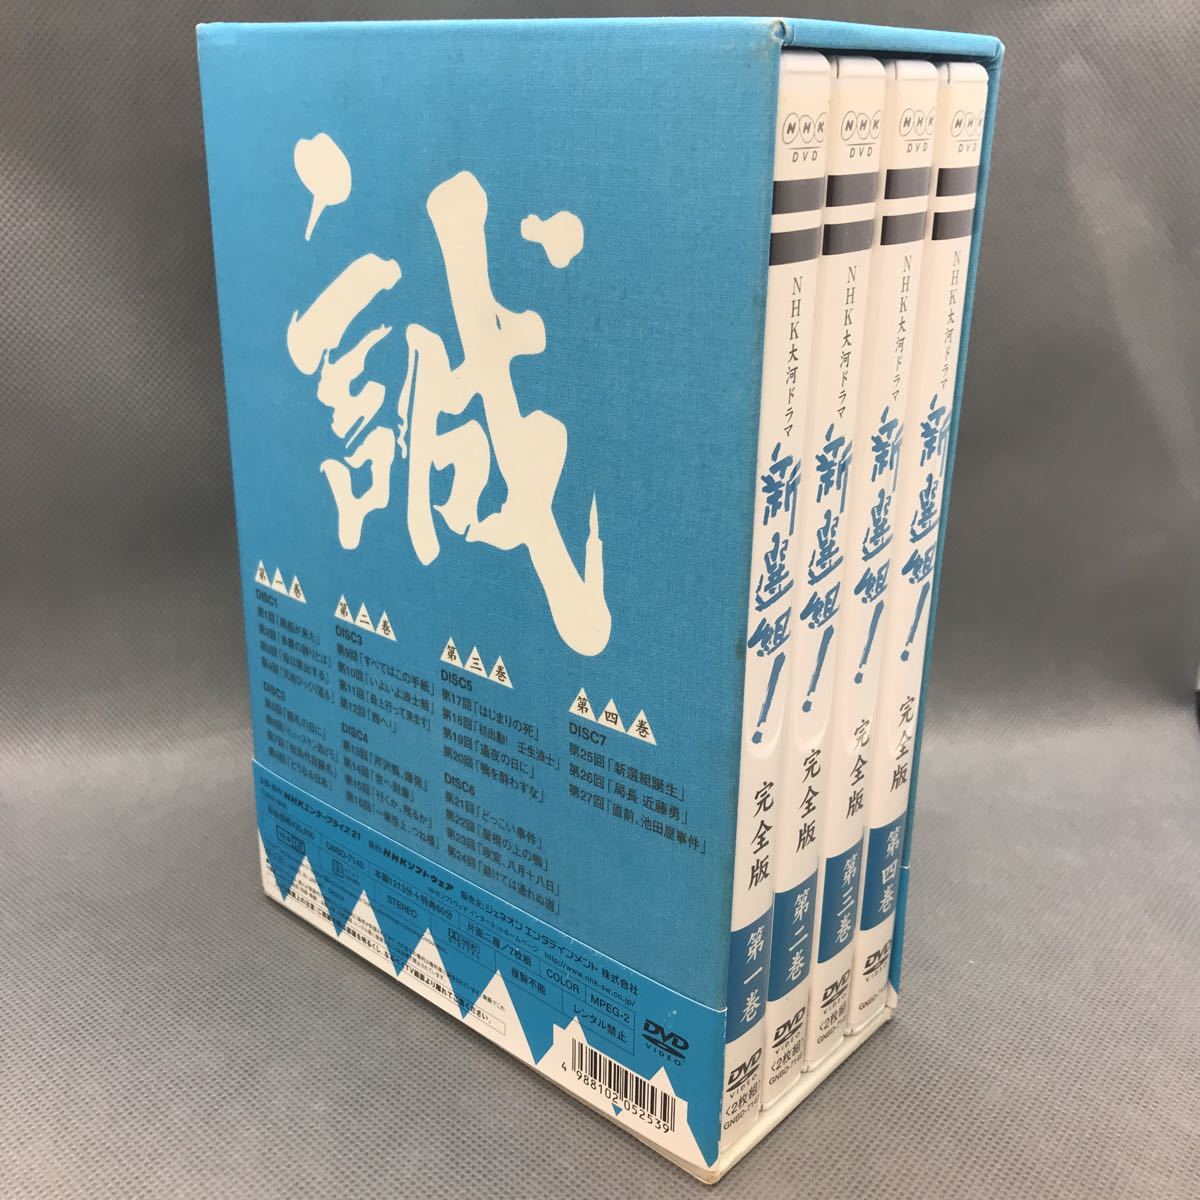 NHK大河ドラマ 新選組 完全版 第壱集 DVD-BOX 7枚組 作:三谷幸喜 香取 